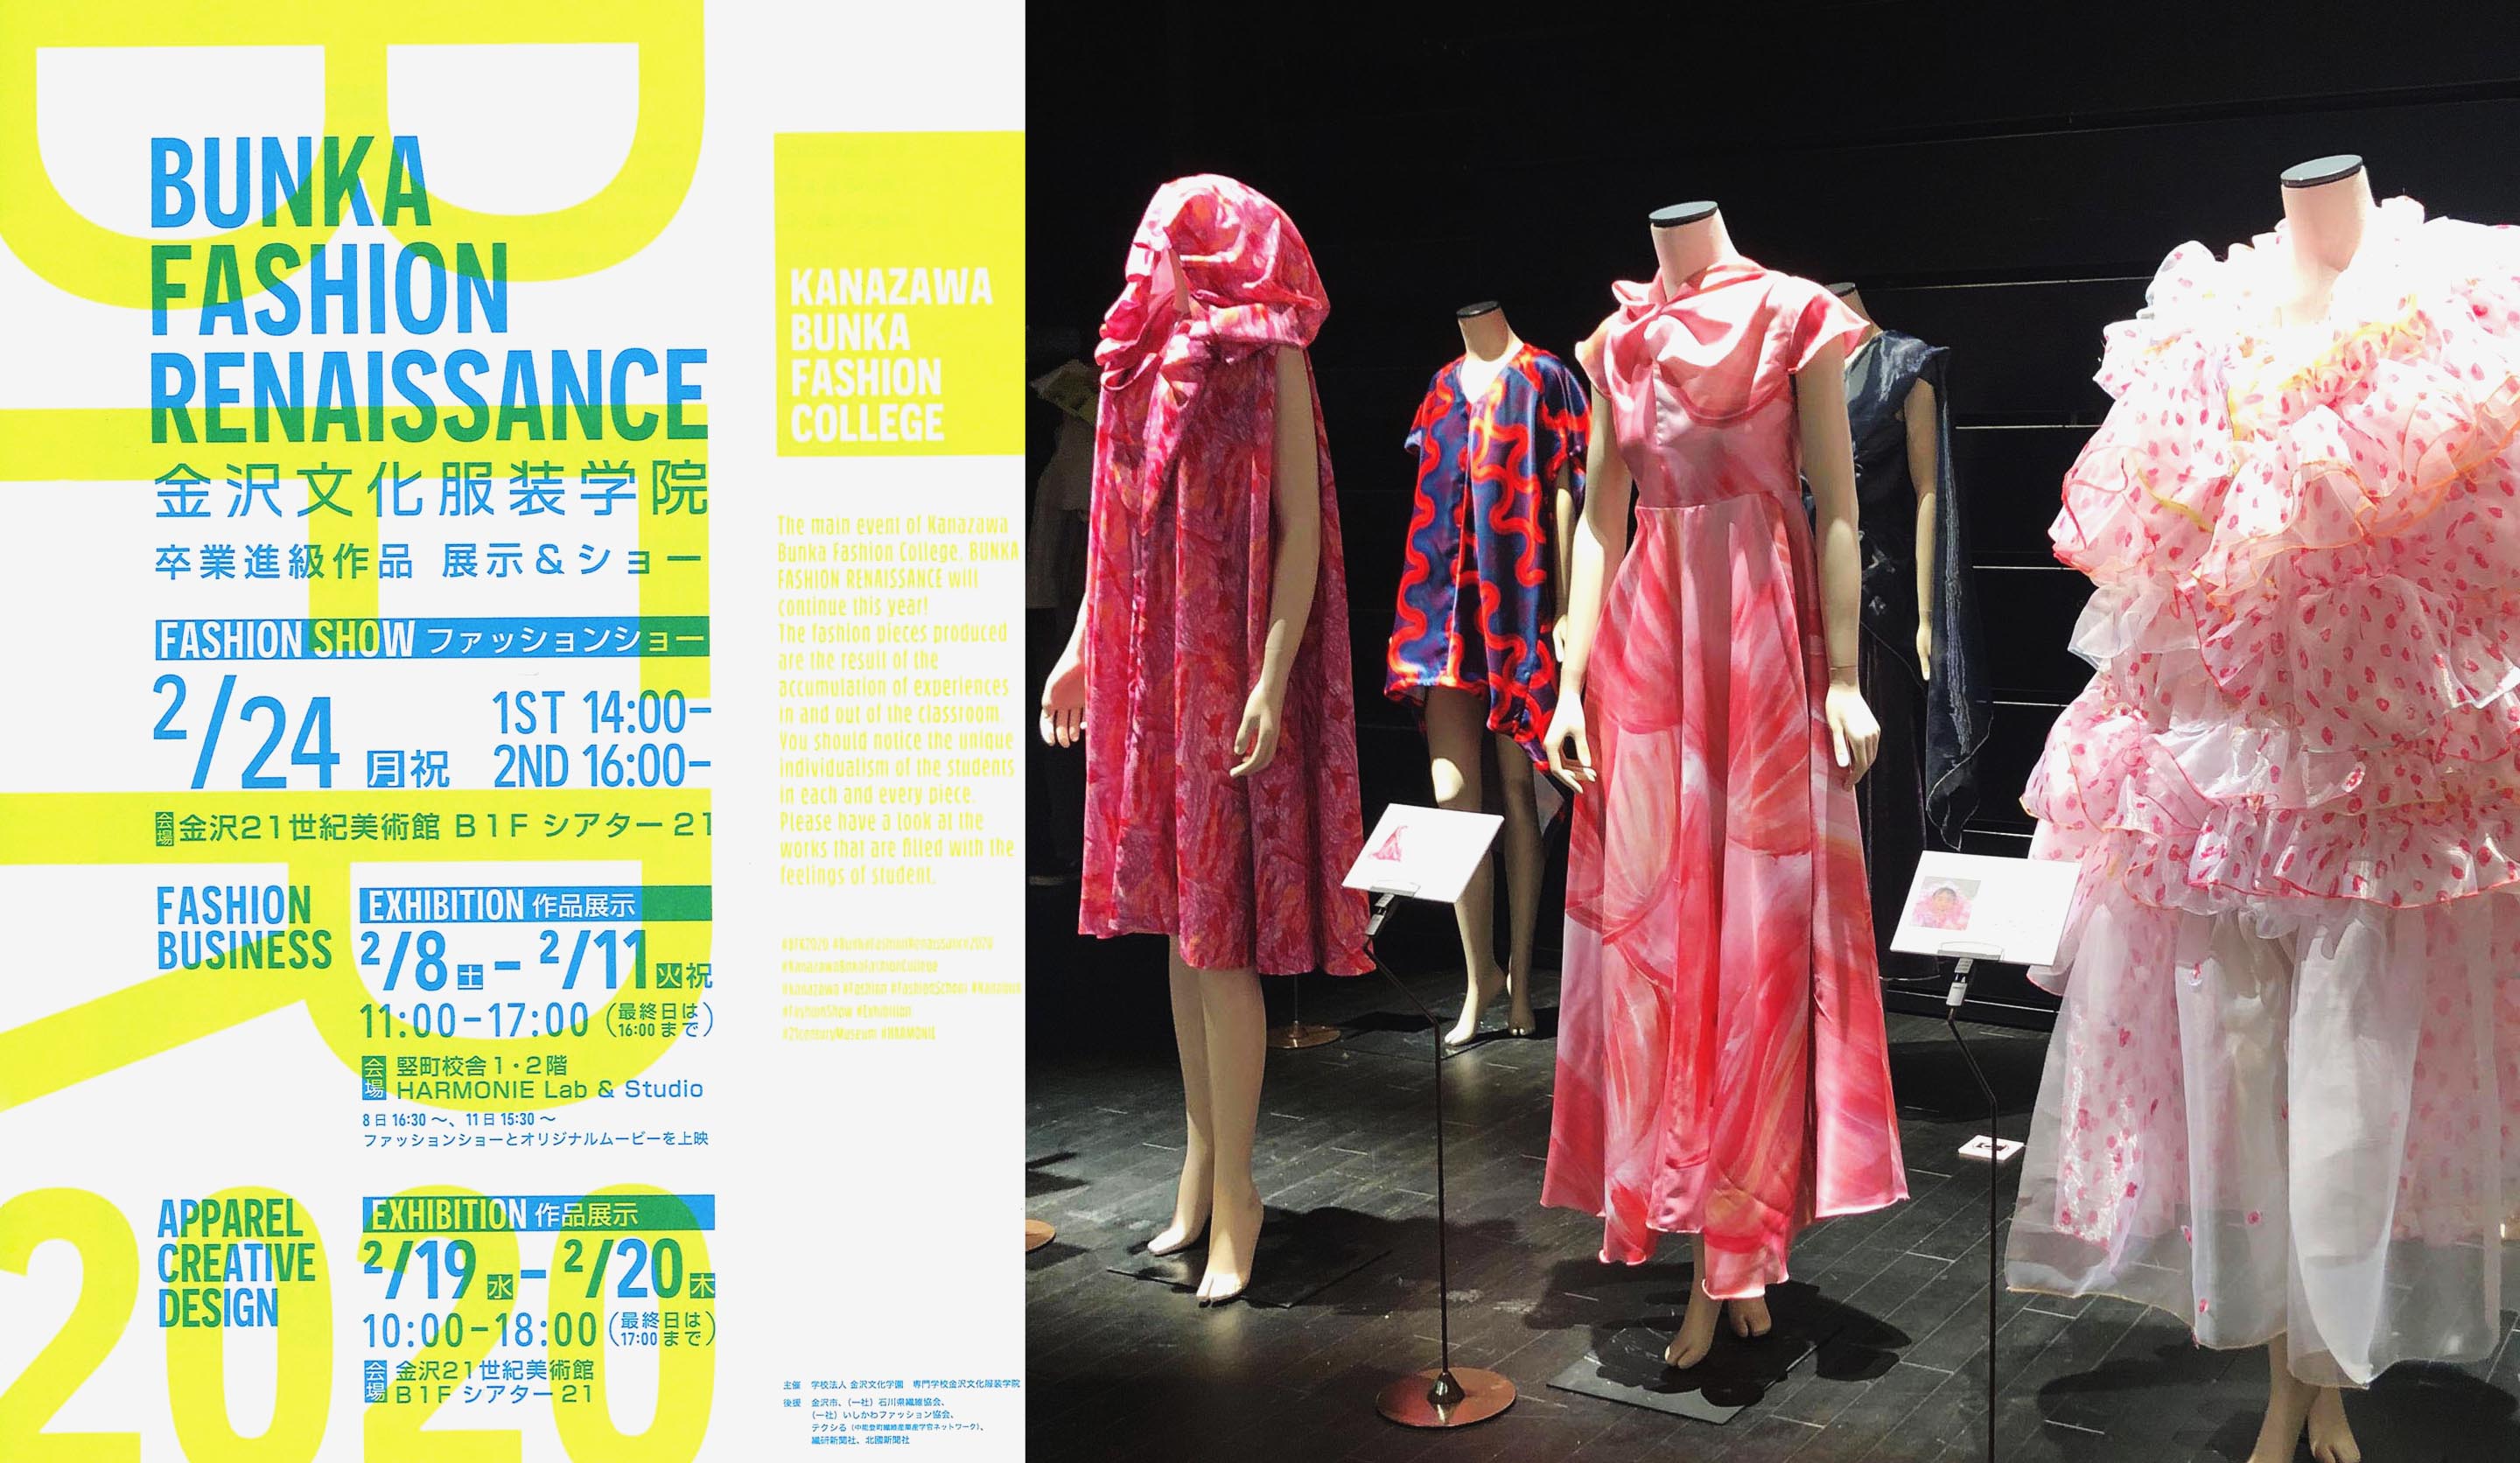 Bunka Fashion Renaissance金沢文化服装学院作品展示 特集 日本服飾文化振興財団